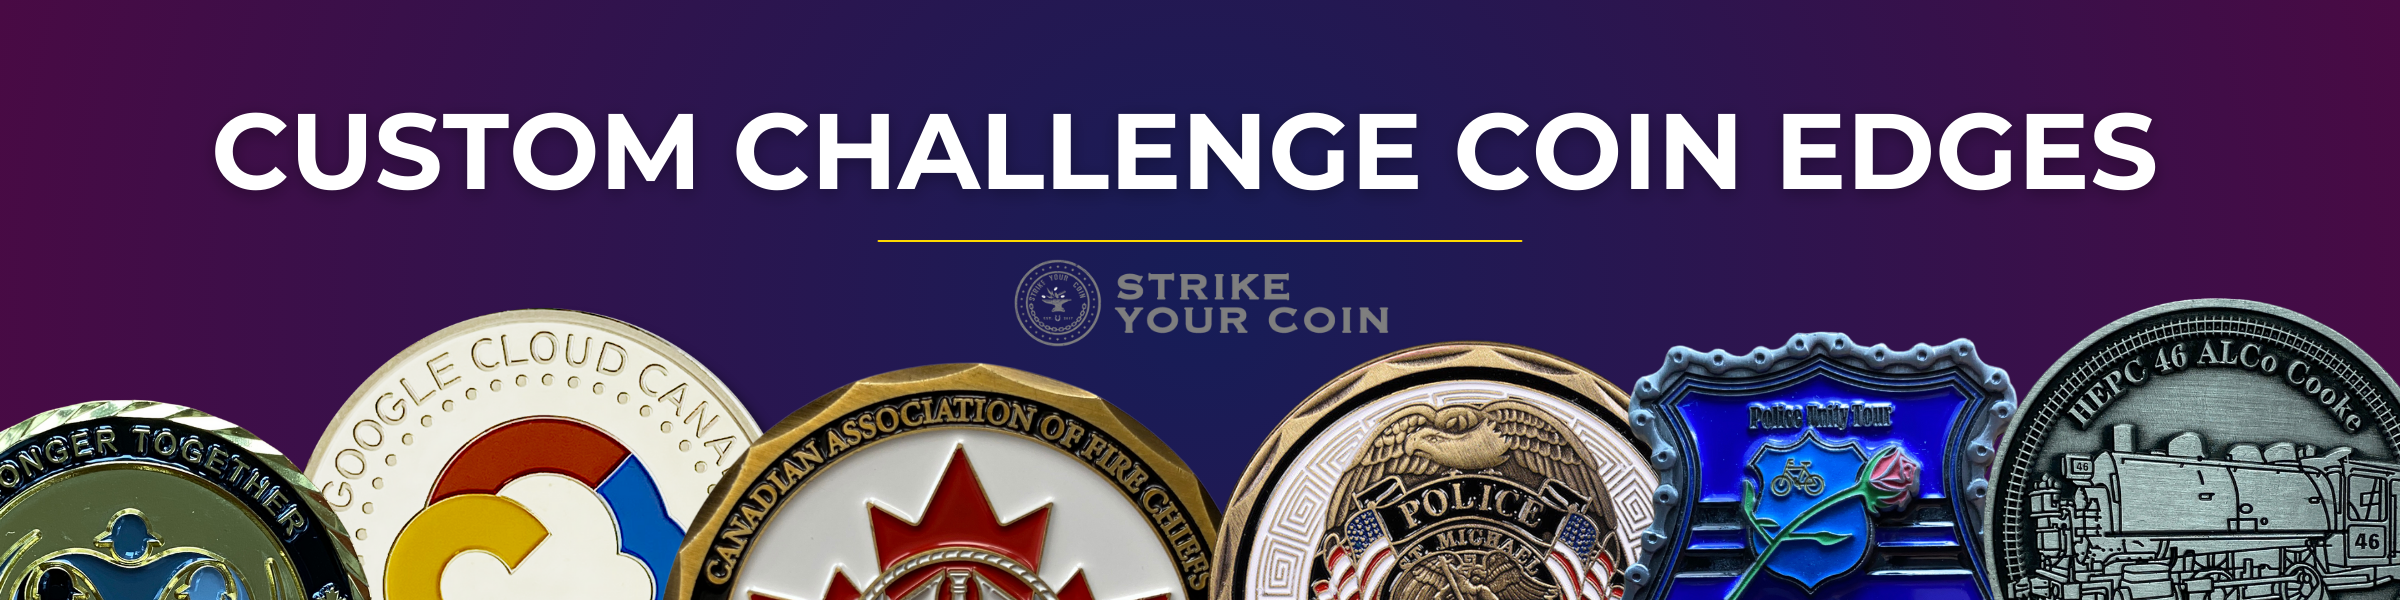 custom challenge coin edges